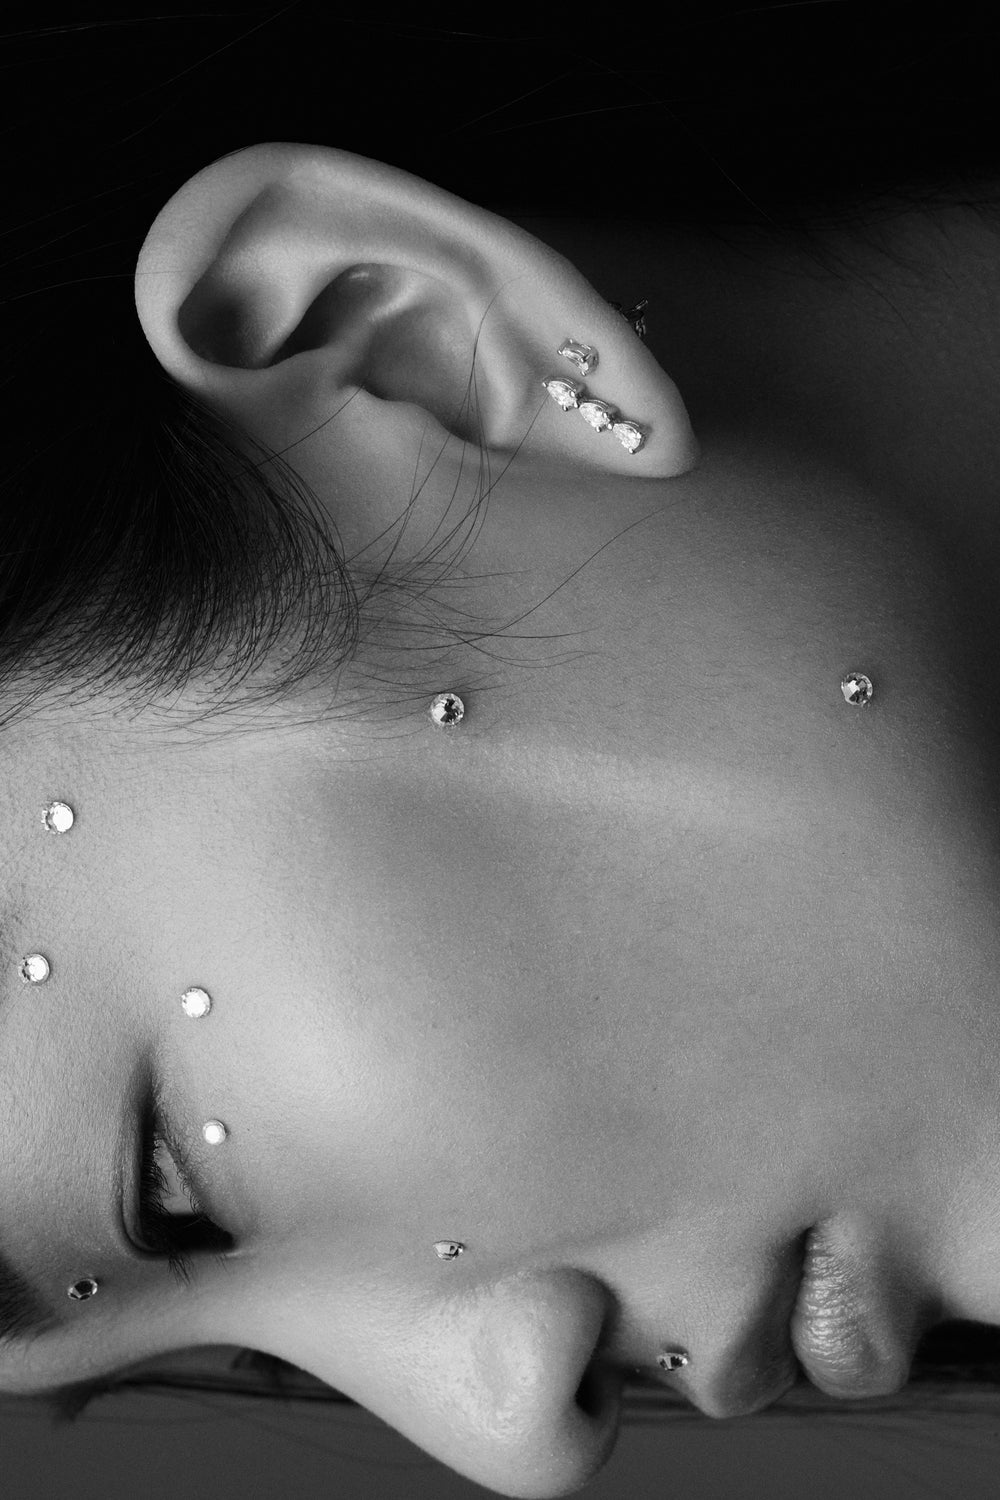 Pear Diamond Bar Earrings | 18K White Gold| Natasha Schweitzer